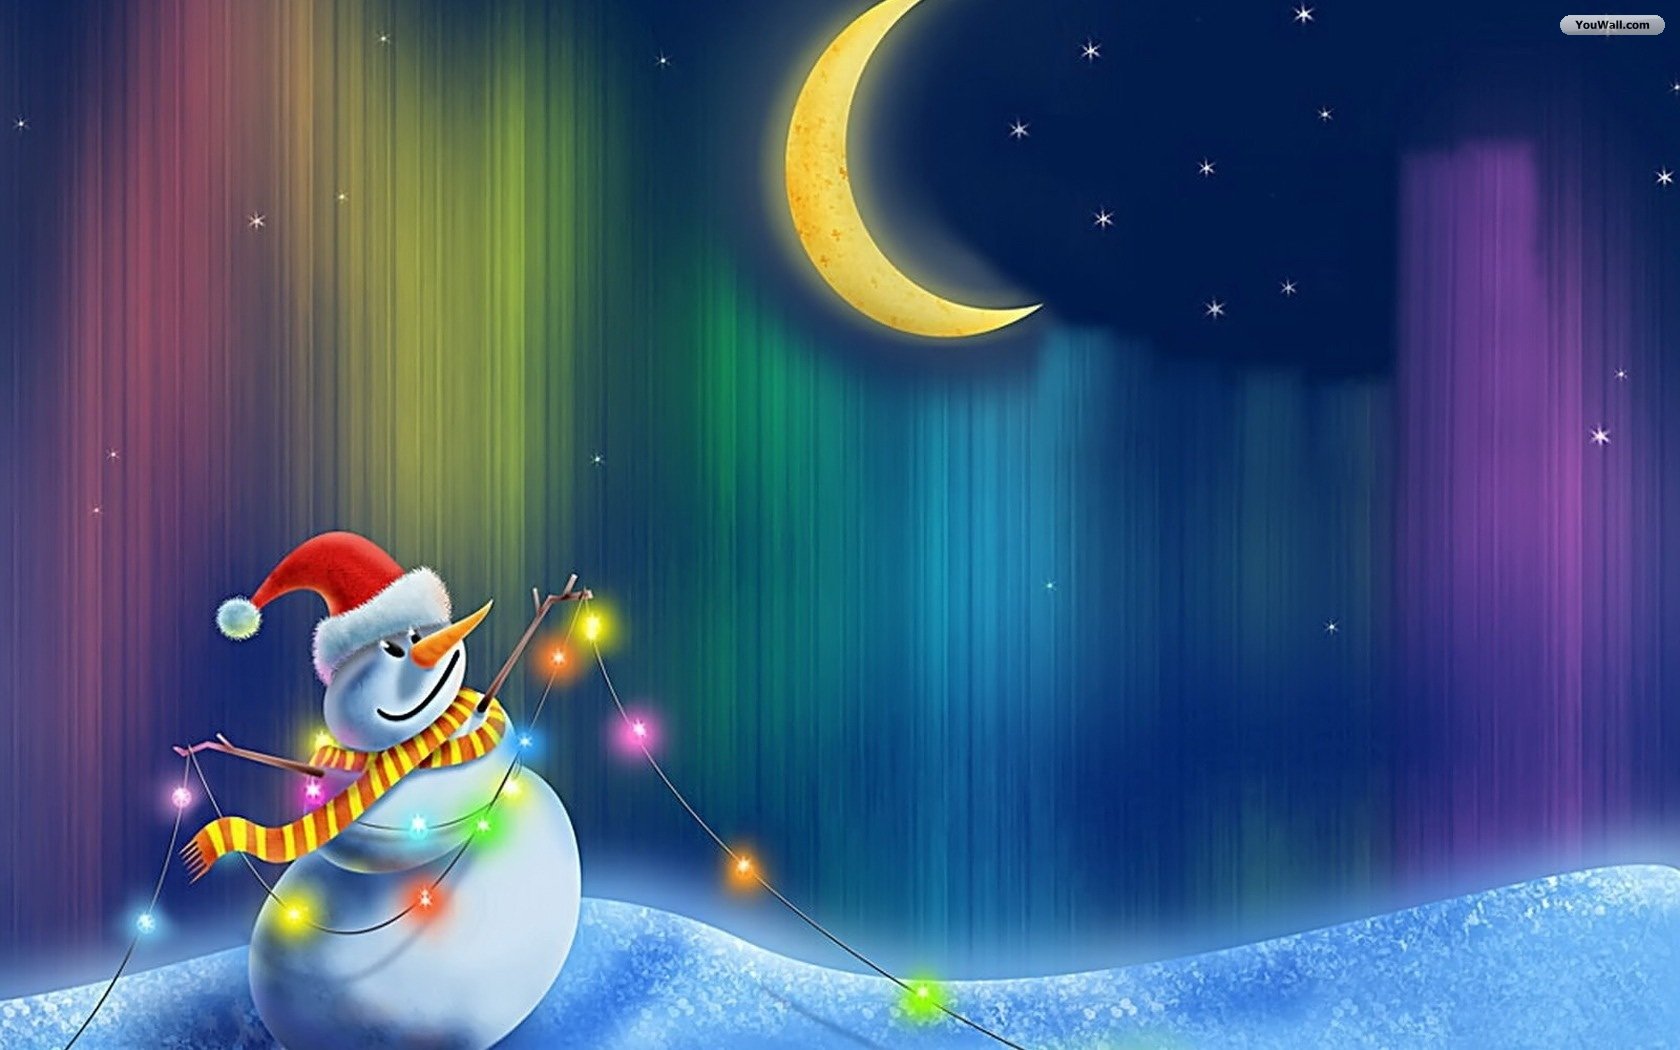  Snowman Wallpaper Christmas Hd   1680x1050 iWallHD   Wallpaper HD 1680x1050